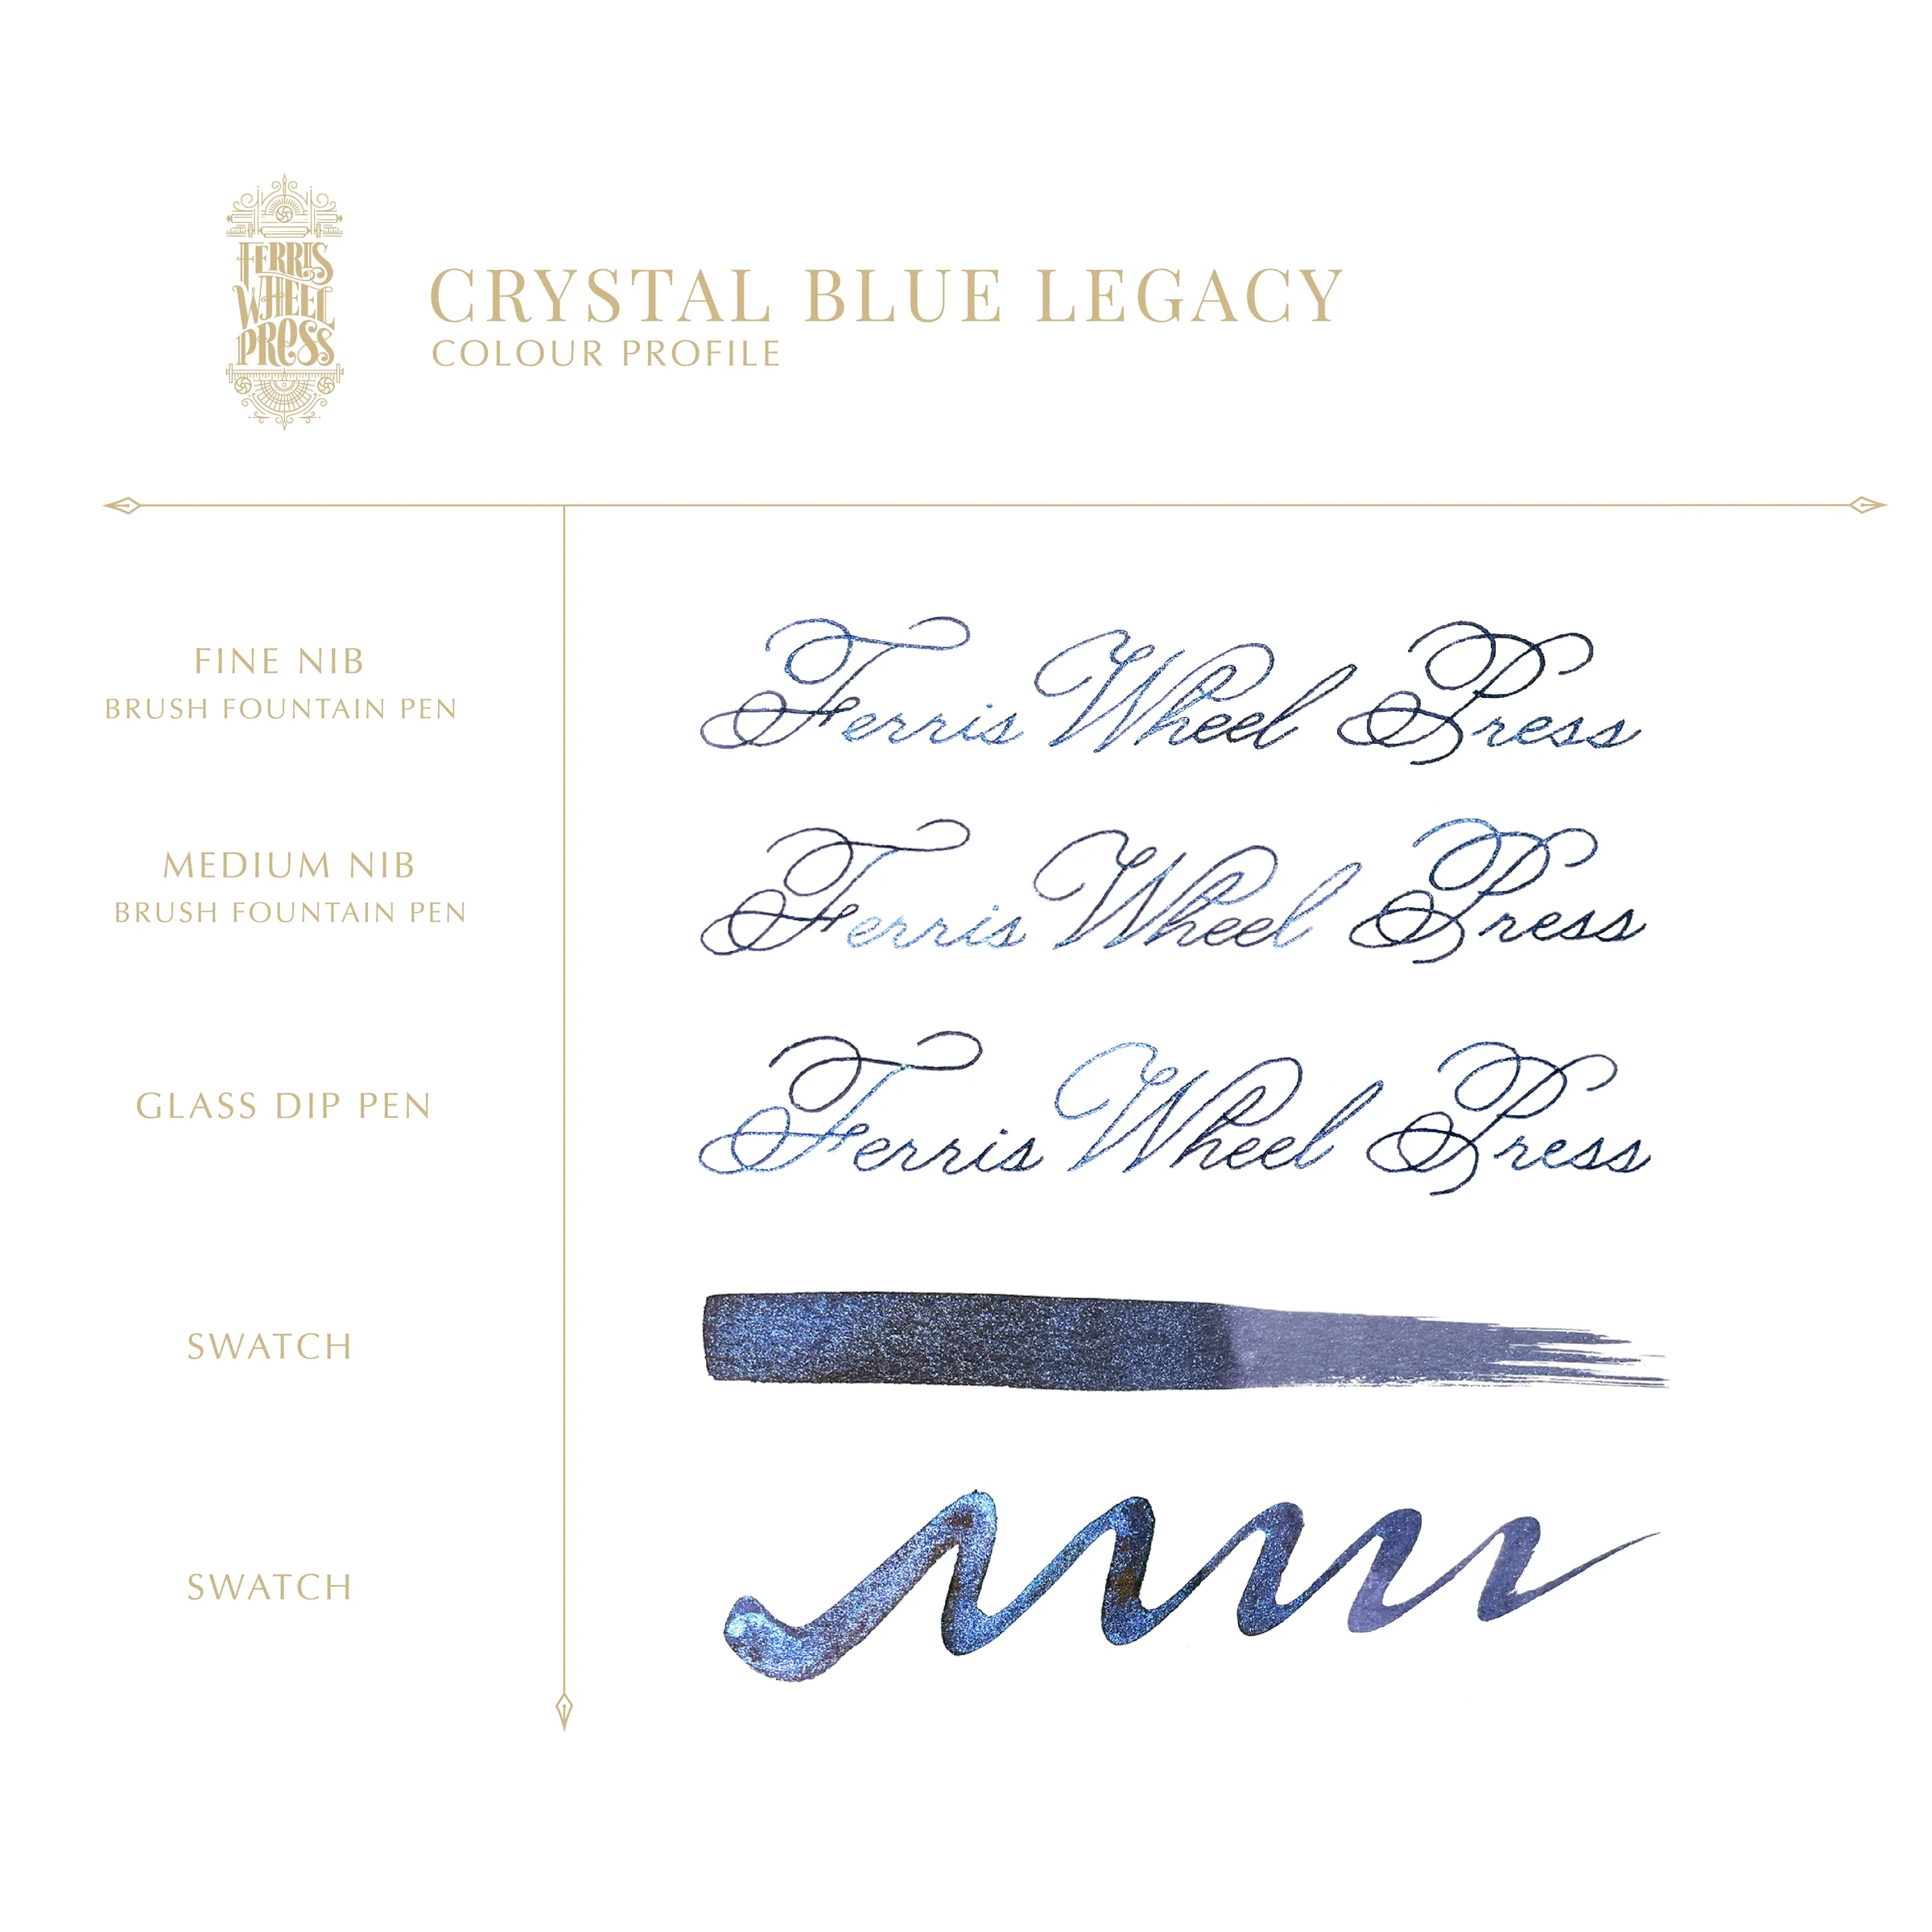 Ferris Wheel Press - Crystal blue Legacy Ink Sample 2ml